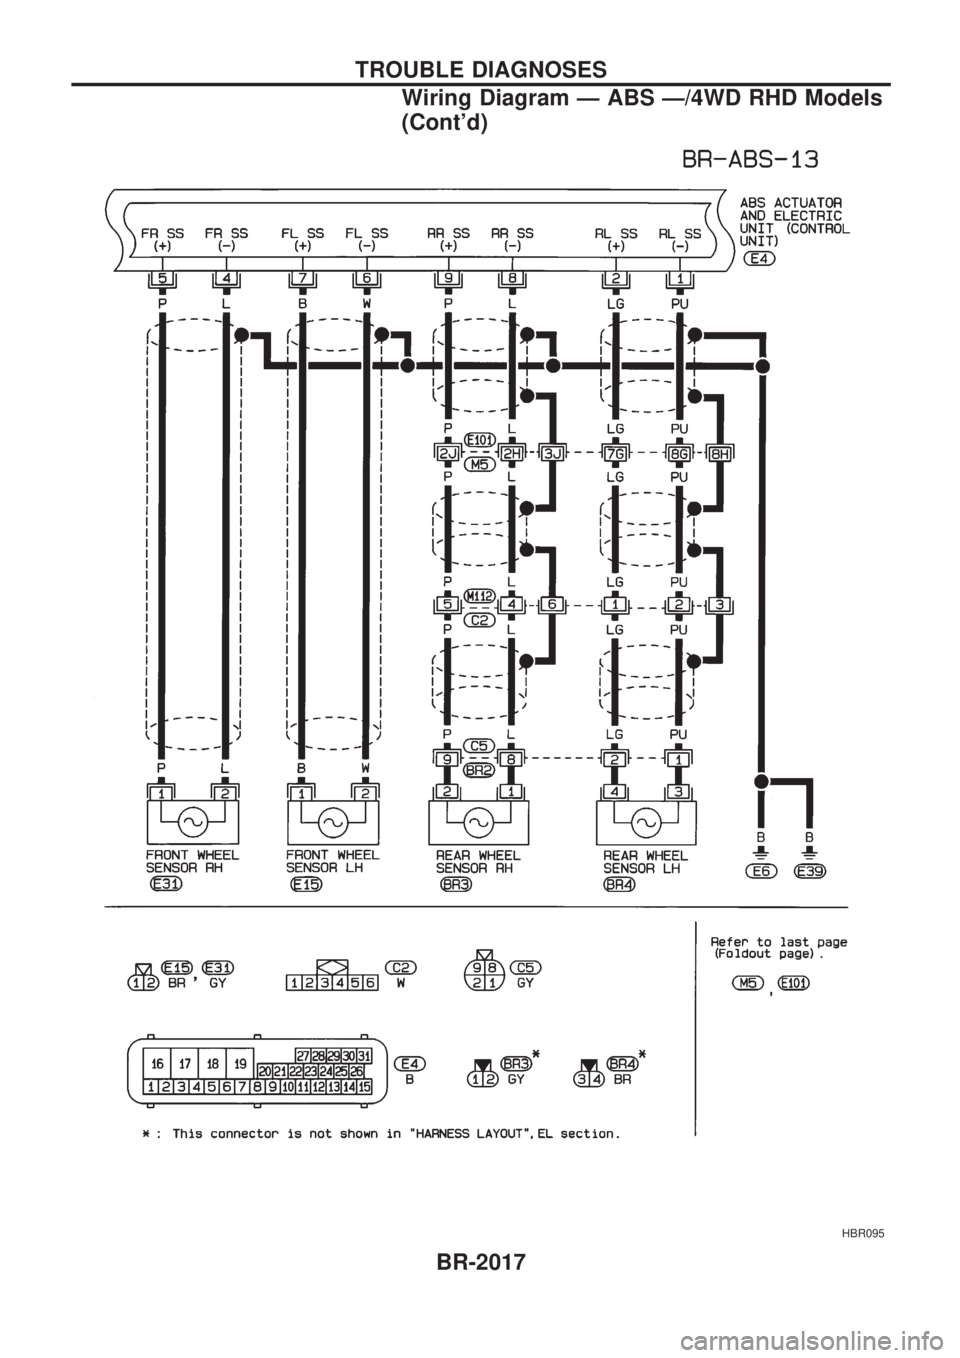 NISSAN PICK-UP 1999  Repair Manual HBR095
TROUBLE DIAGNOSES
Wiring Diagram Ð ABS Ð/4WD RHD Models
(Contd)
BR-2017 